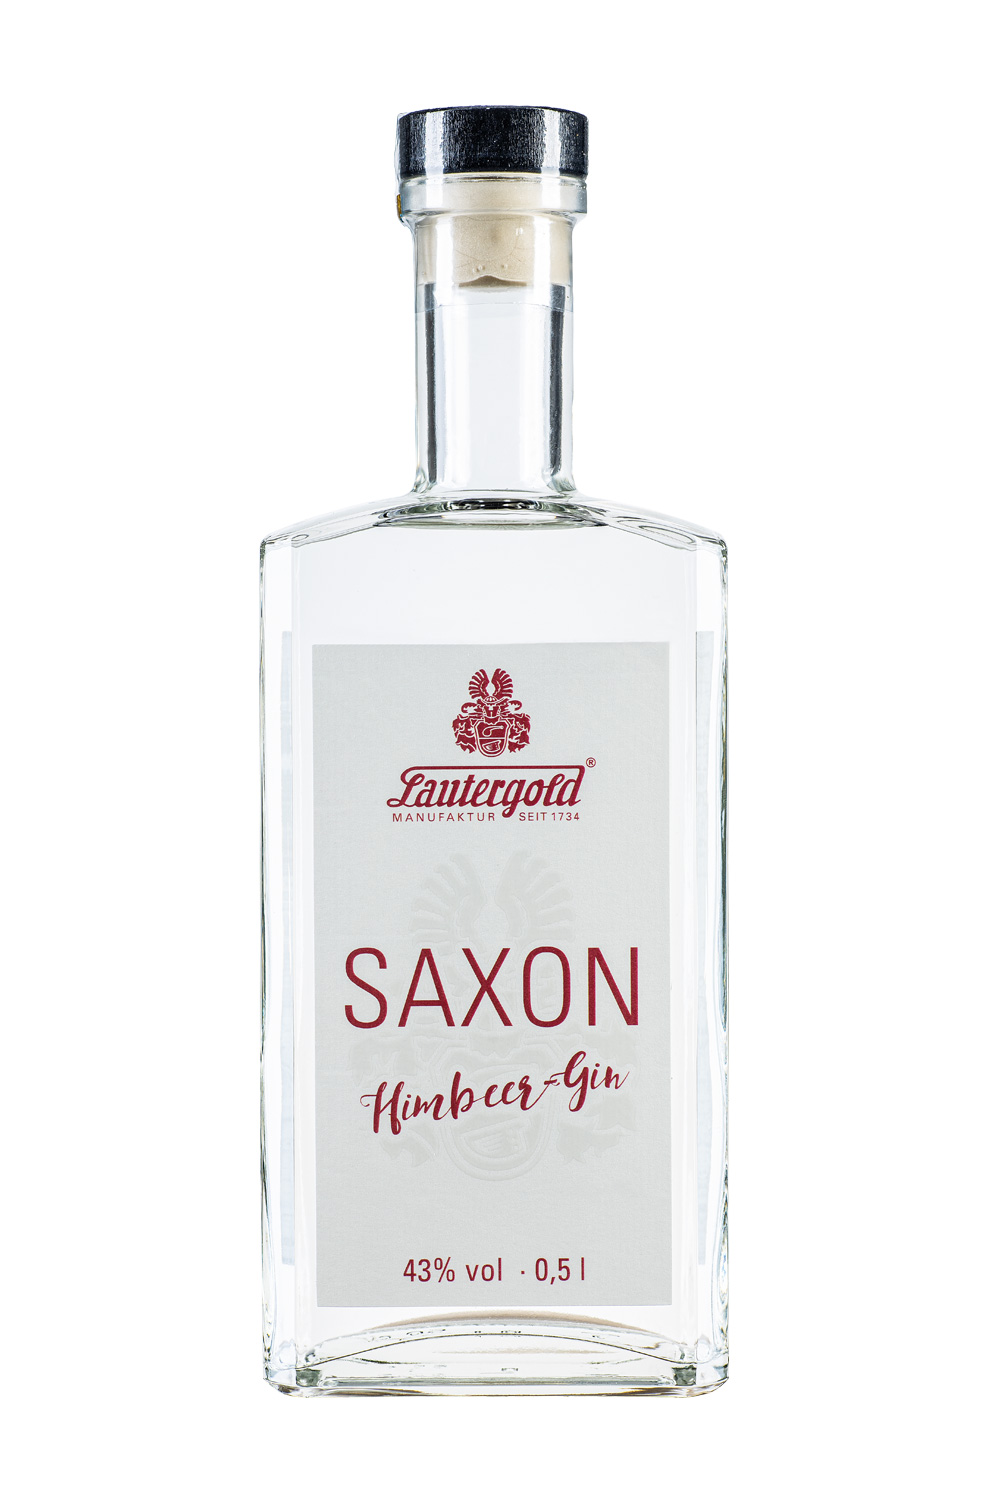 Saxon Himbeer Gin